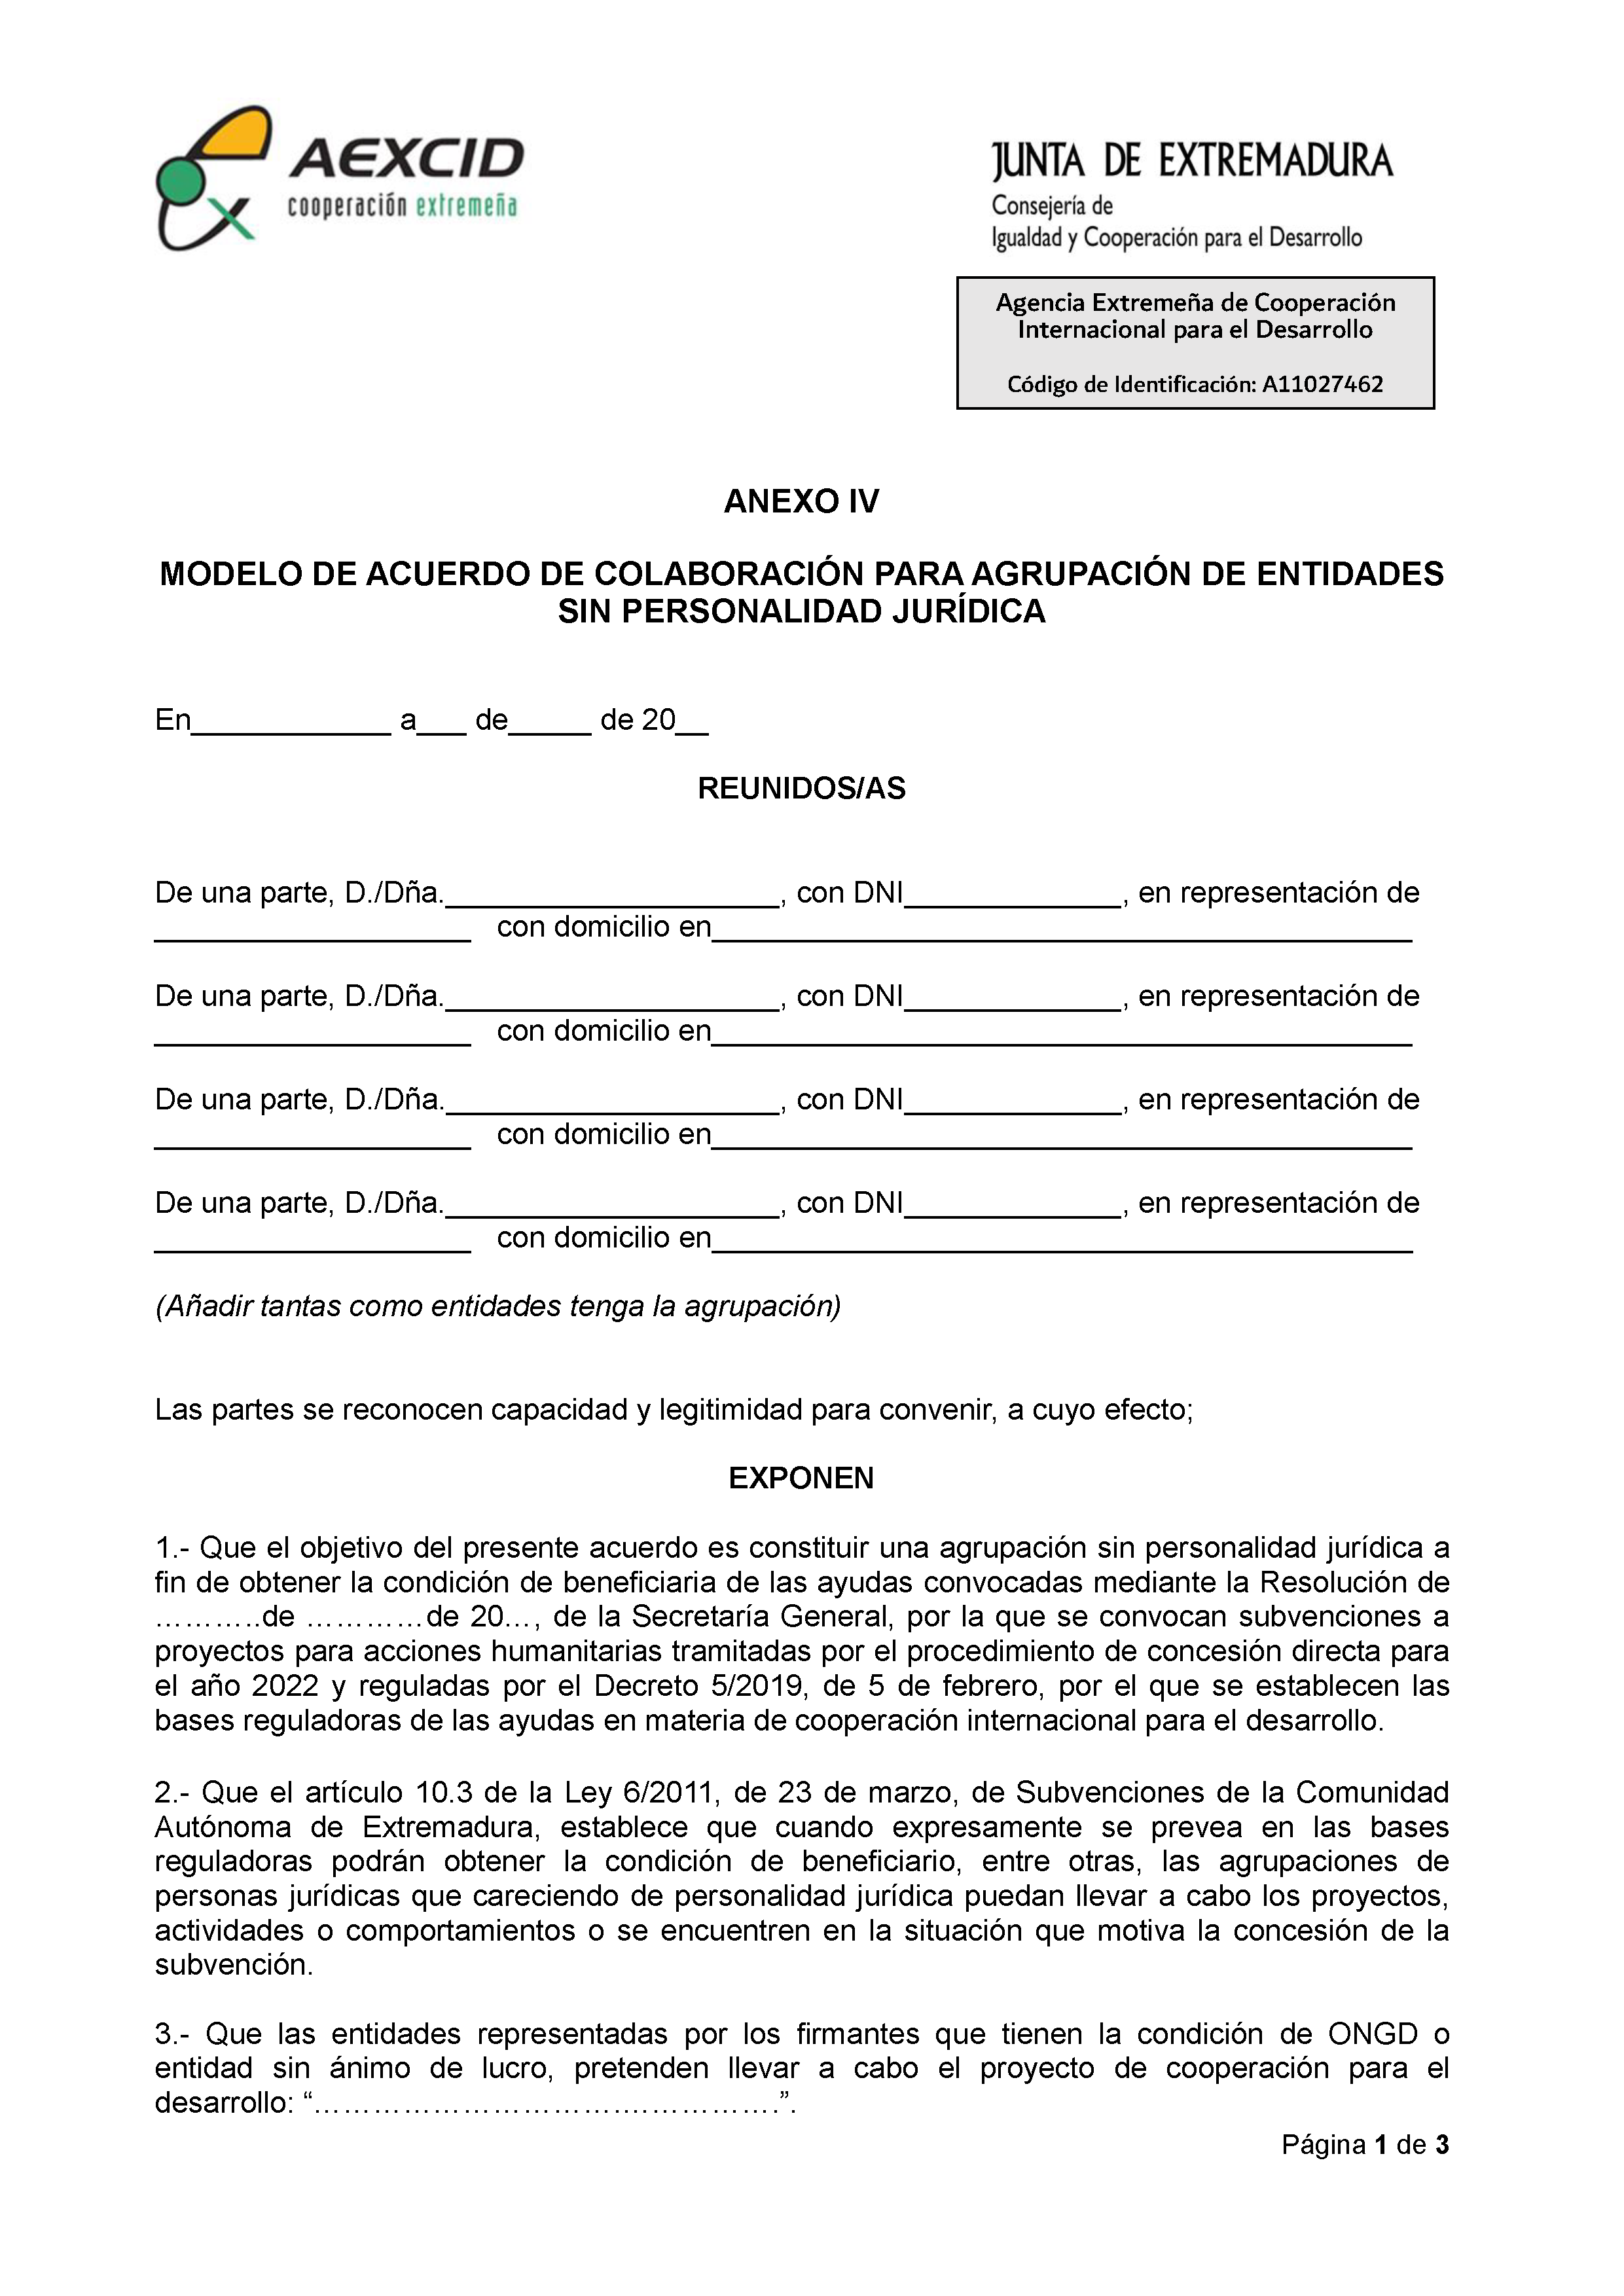 ANEXO IV MODELO DE ACUERDO DE COLABORACIÓN PARA AGRUPACIÓN DE ENTIDADES SIN PERSONALIDAD JURÍDICA PAG.1